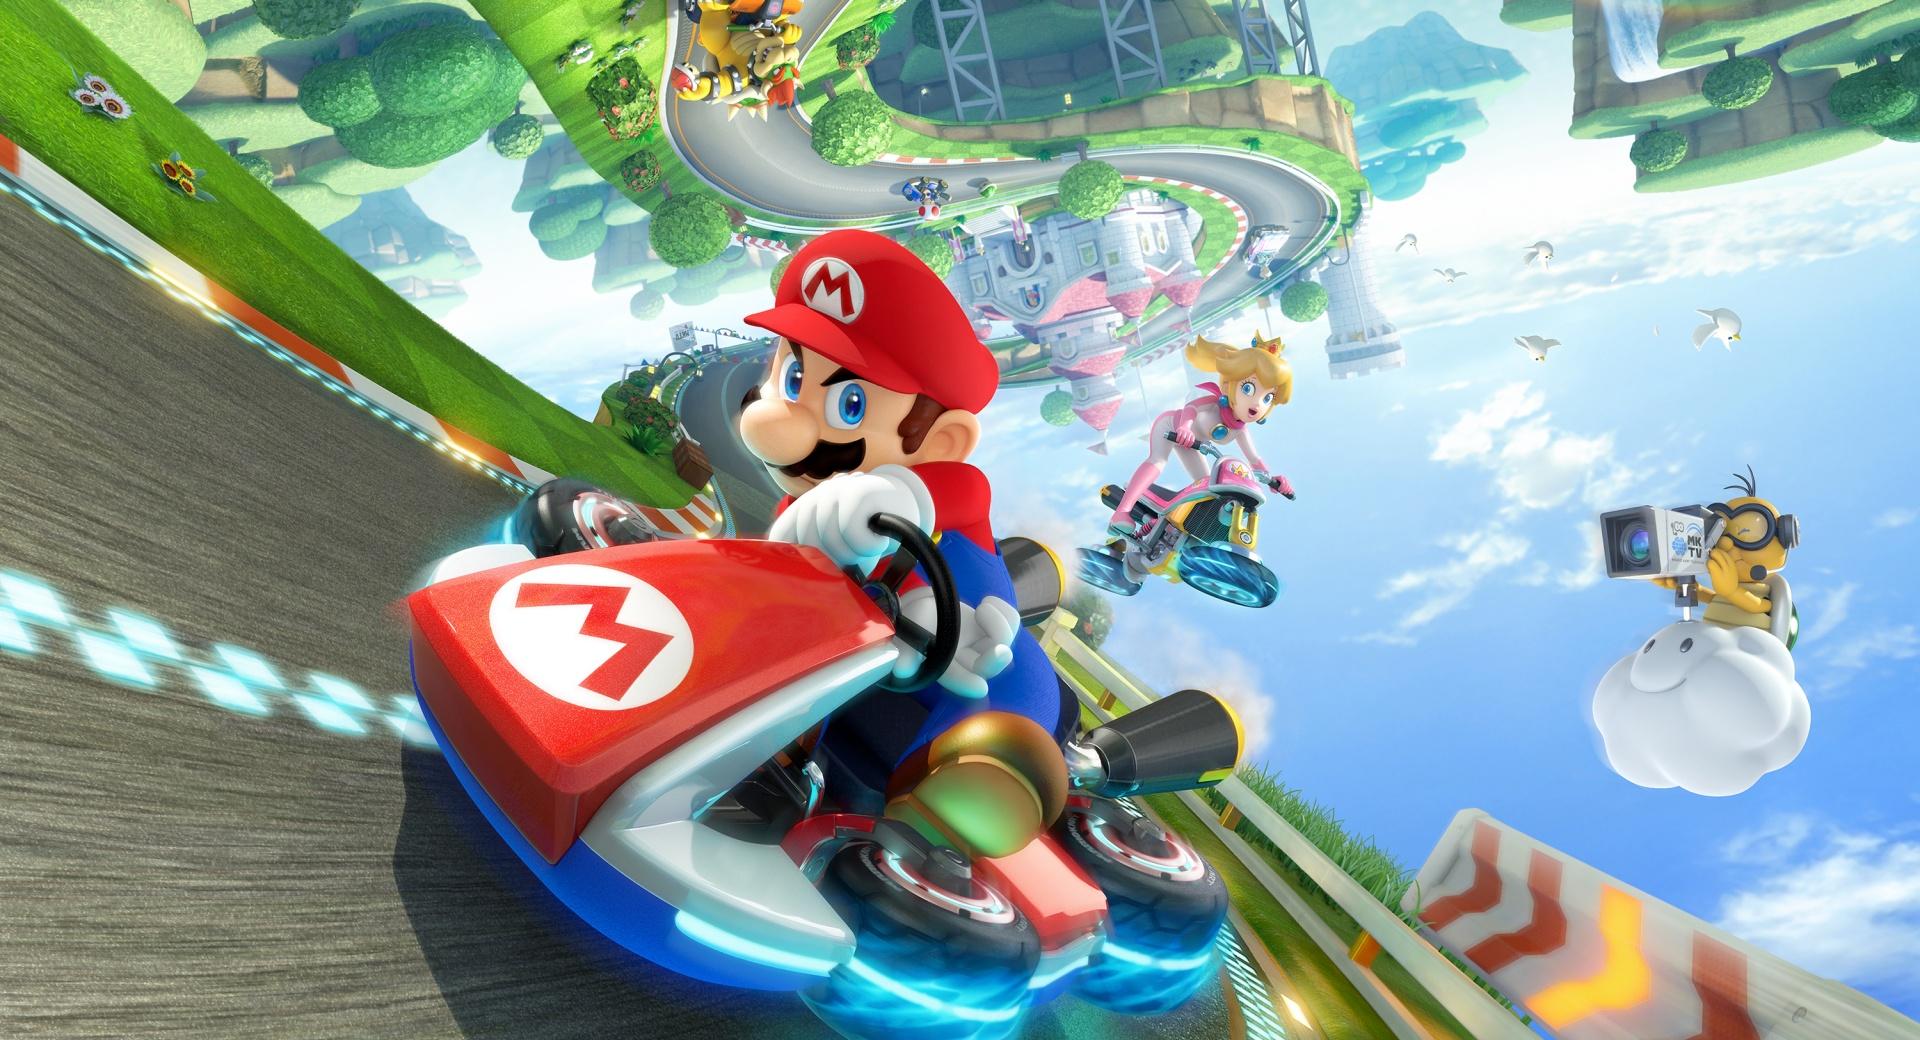 Mario Kart 8 Koopaling Characters at 1280 x 960 size wallpapers HD quality